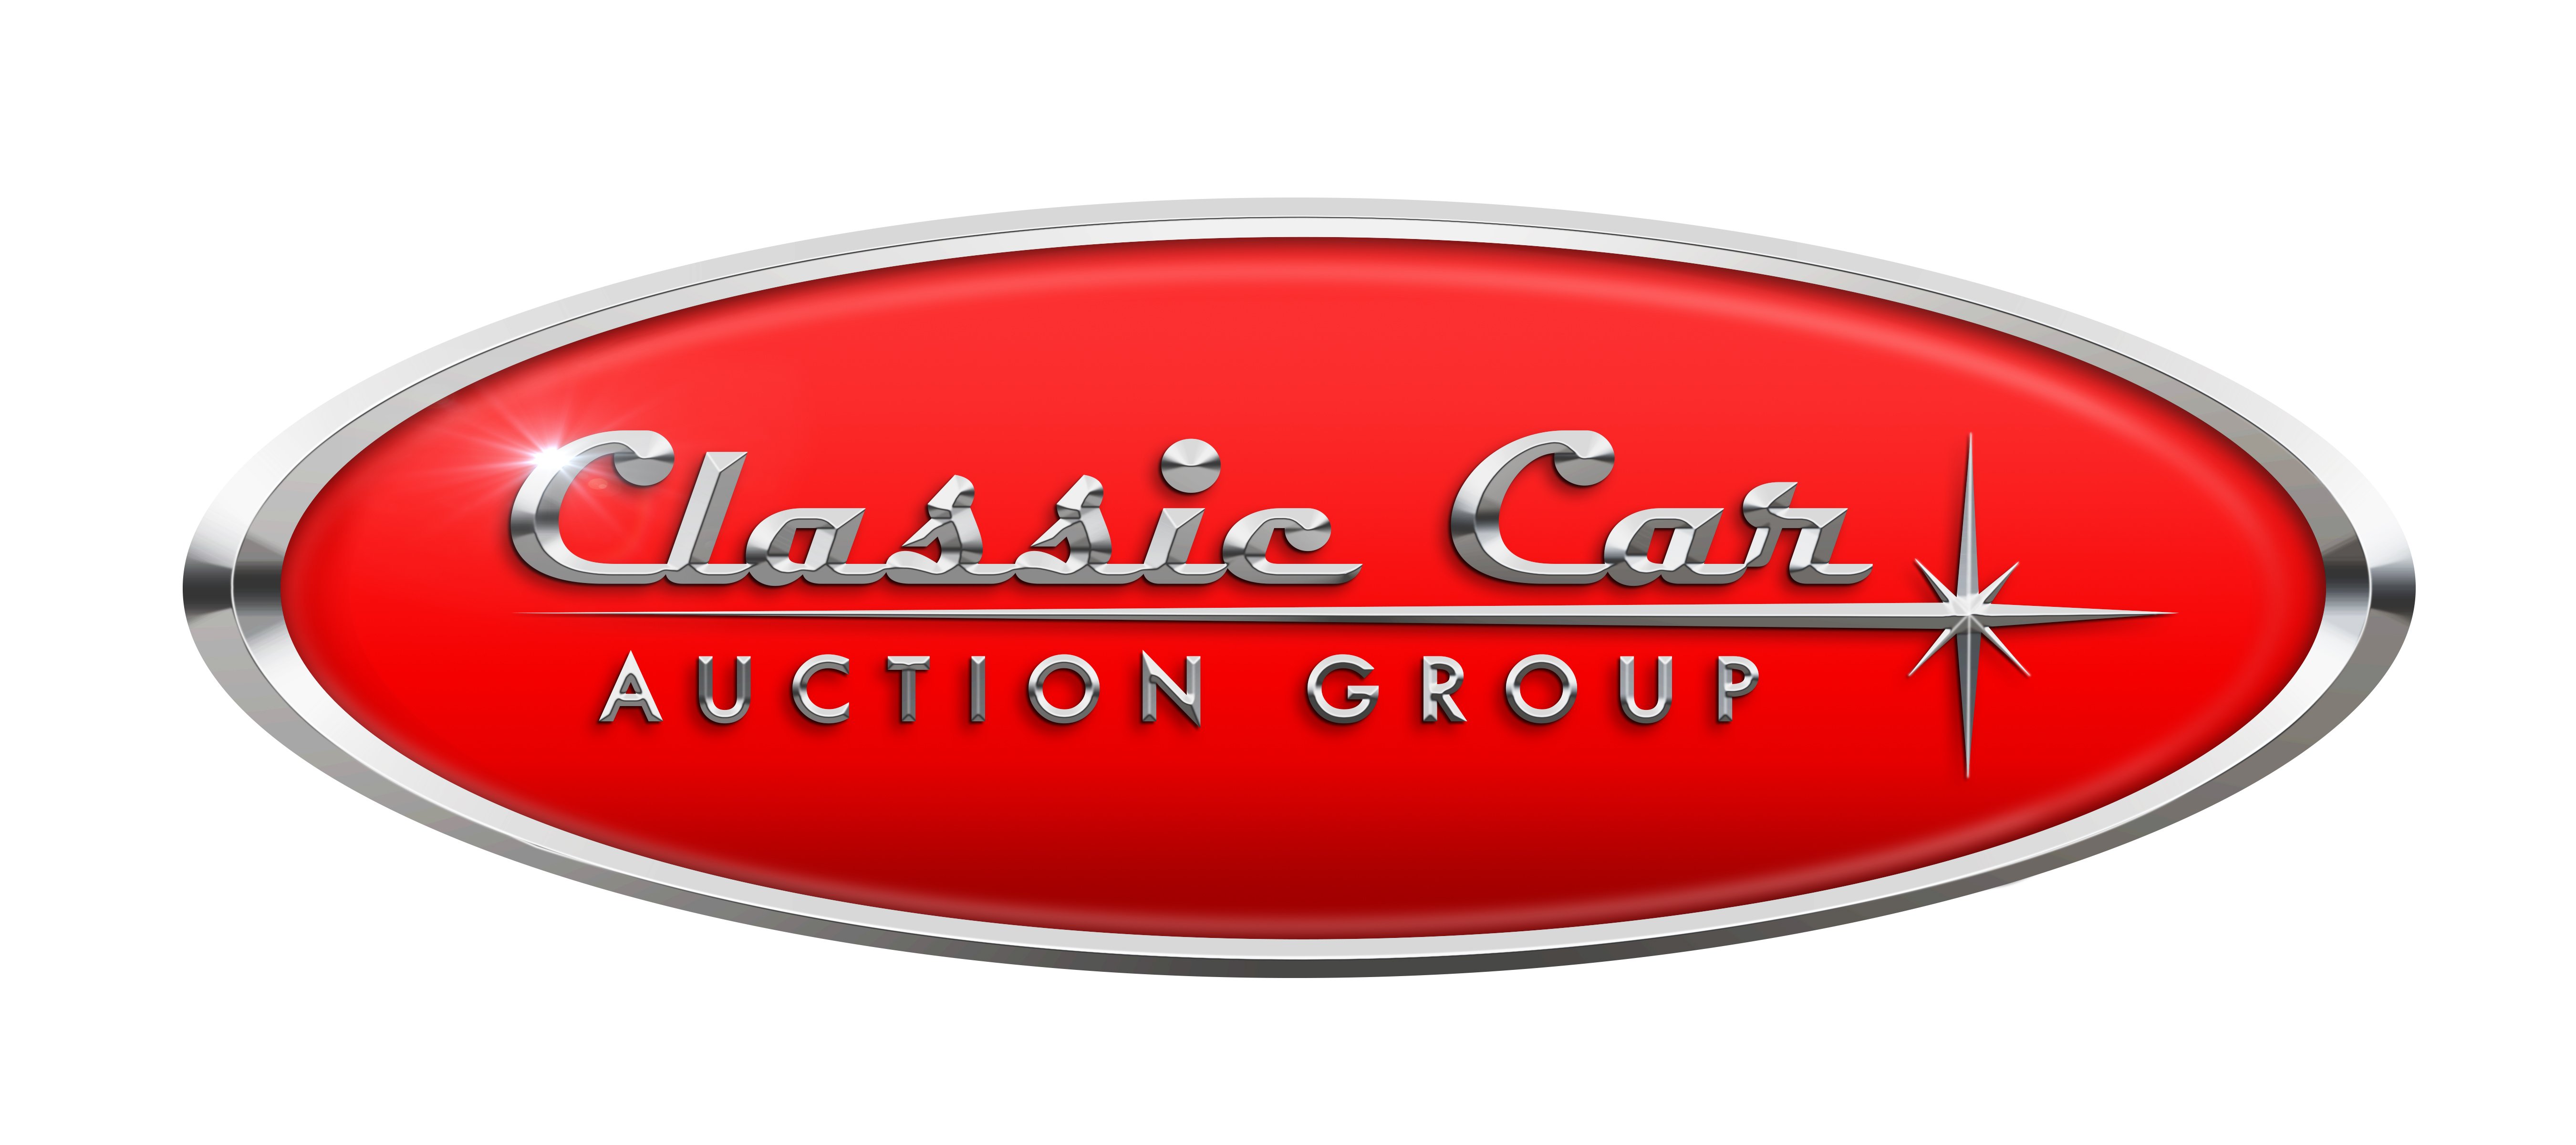 10th Annual Montana Classic Car Auction